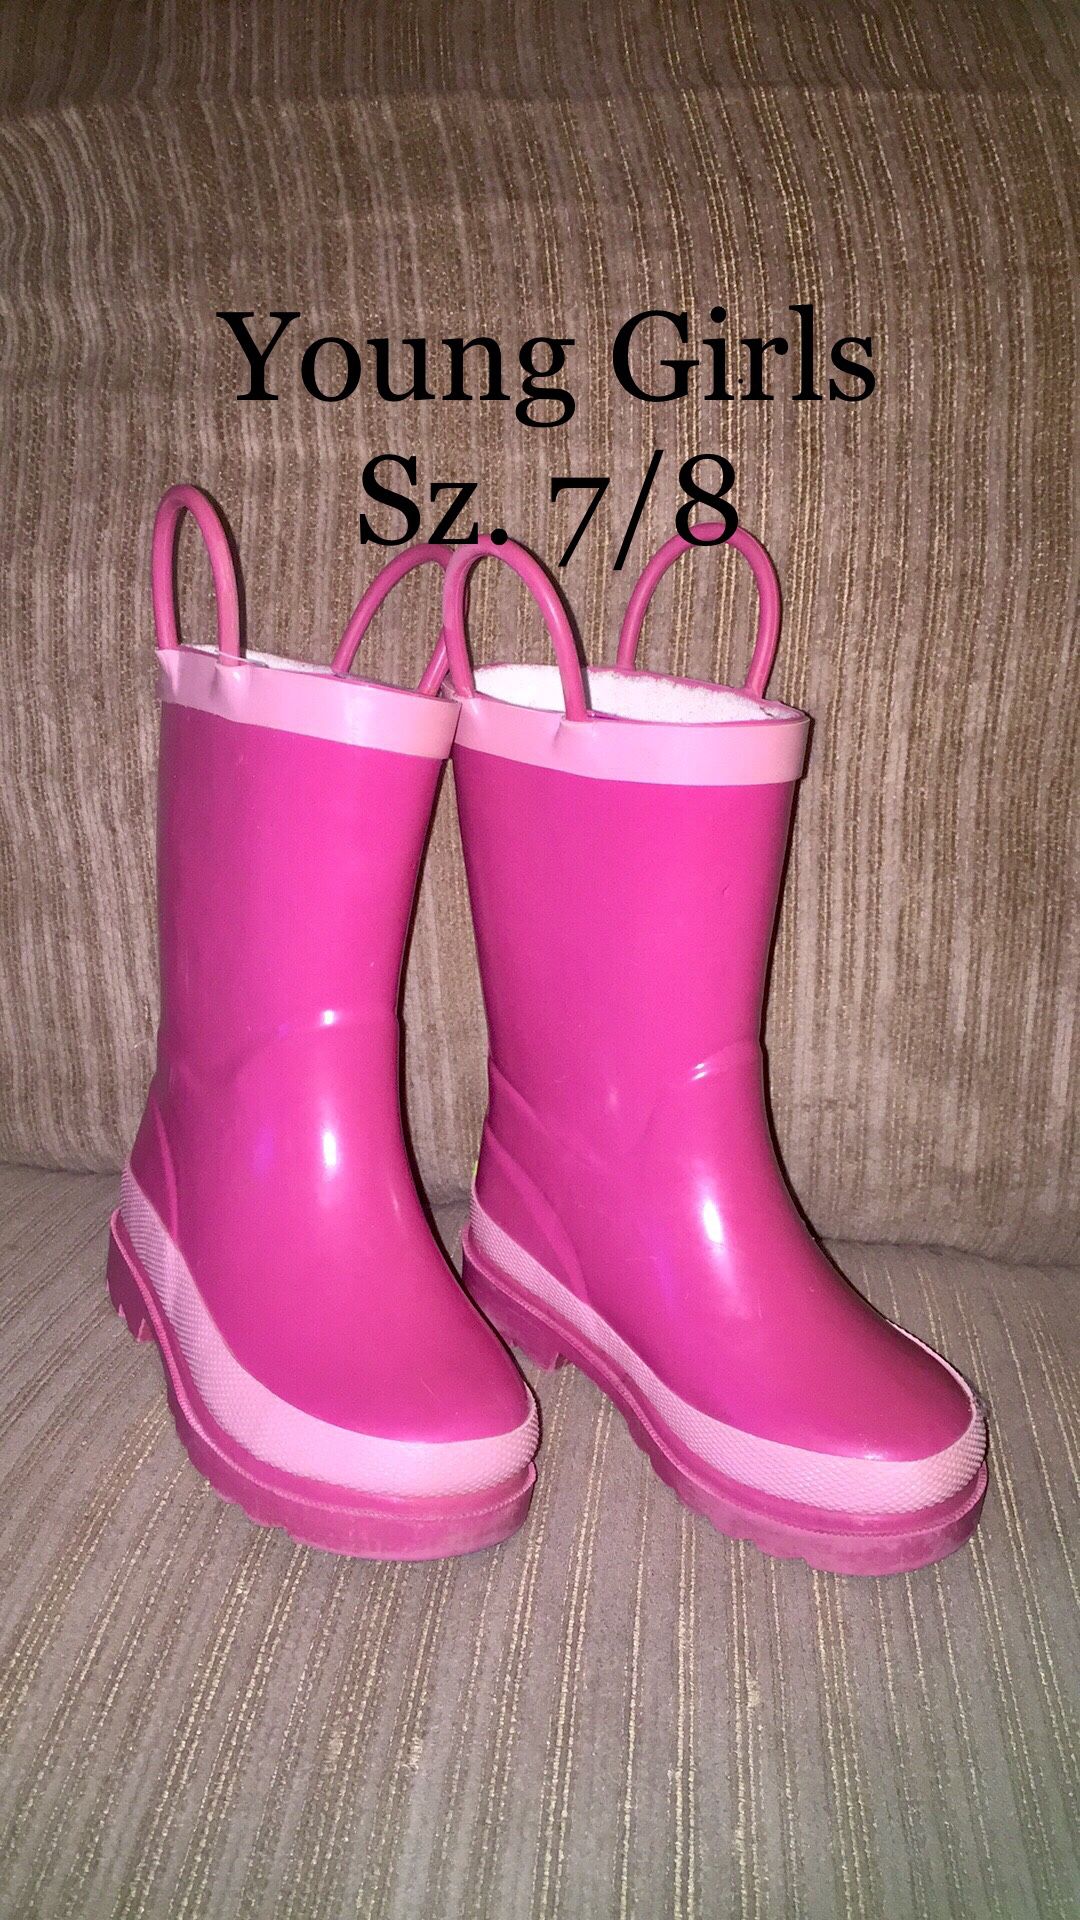 Girls Rain Boots, Sz. 7/8